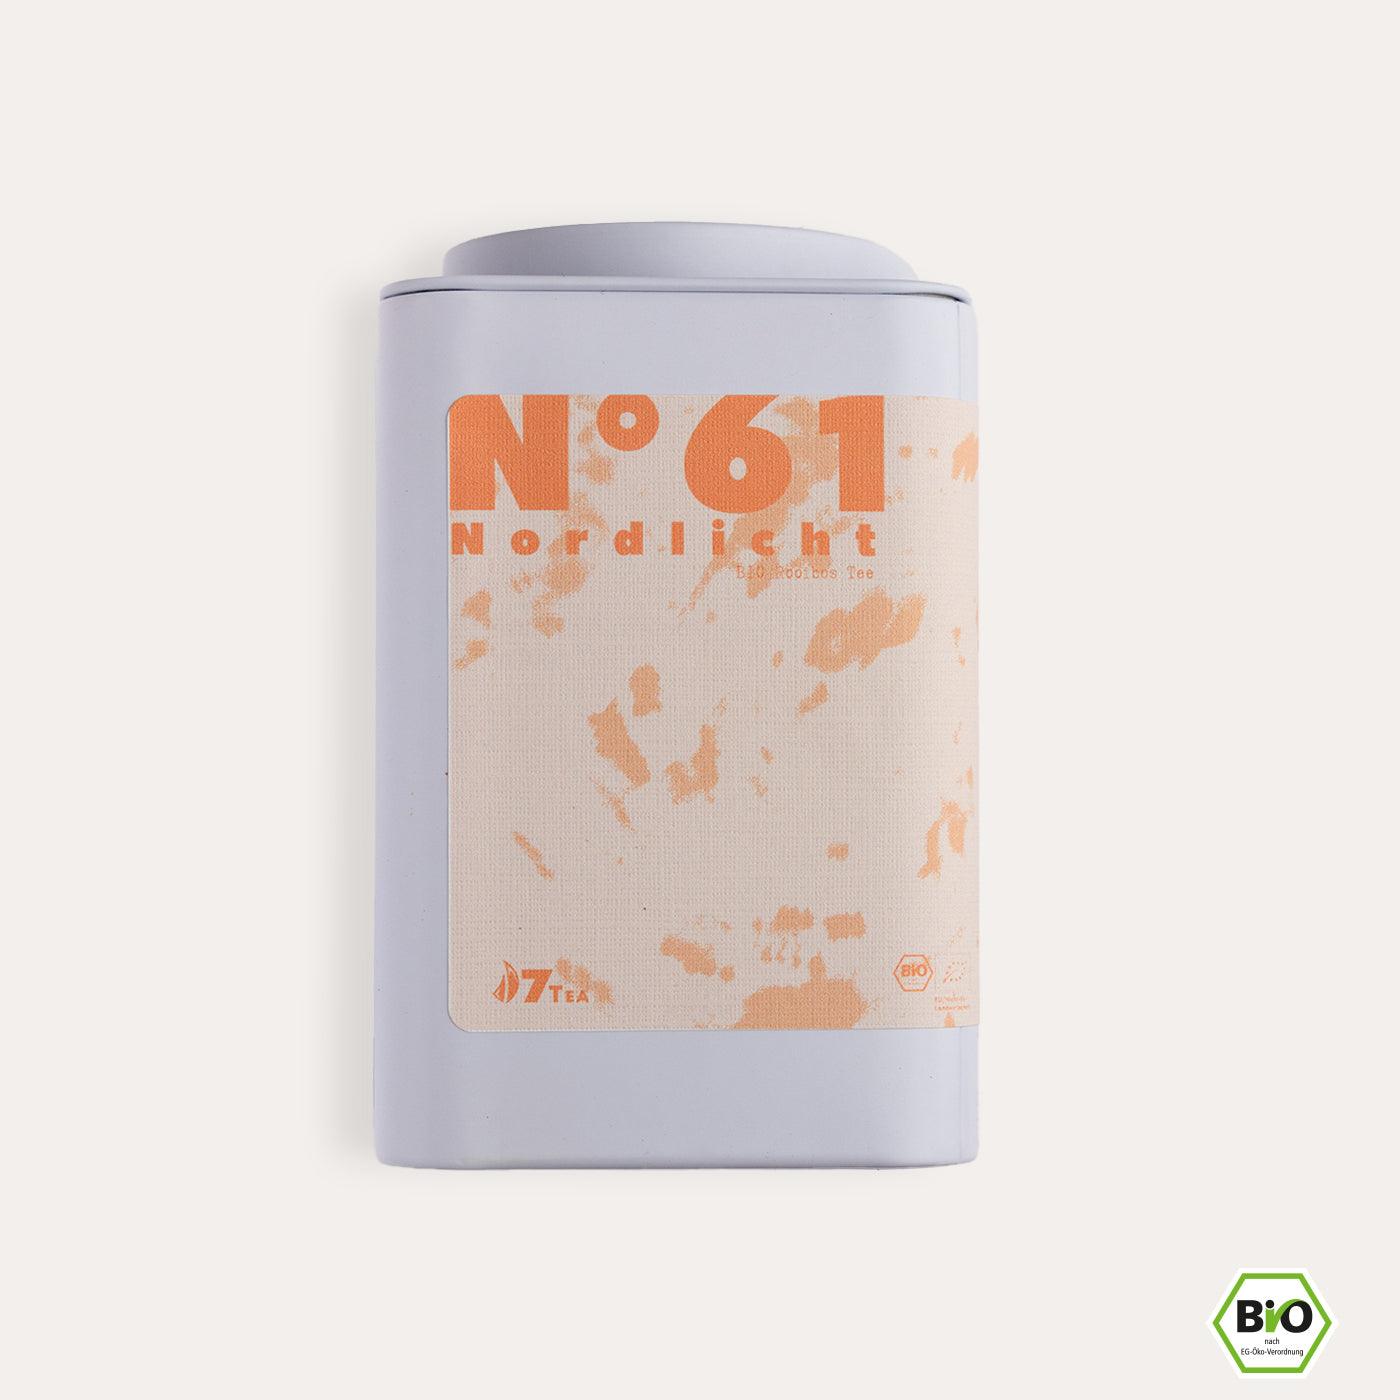 N°61 | Nordlicht Zitrusfeige - Rooibos, Orange & Kaktusfeige - 7Tea® Bio-Tee Onlineshop